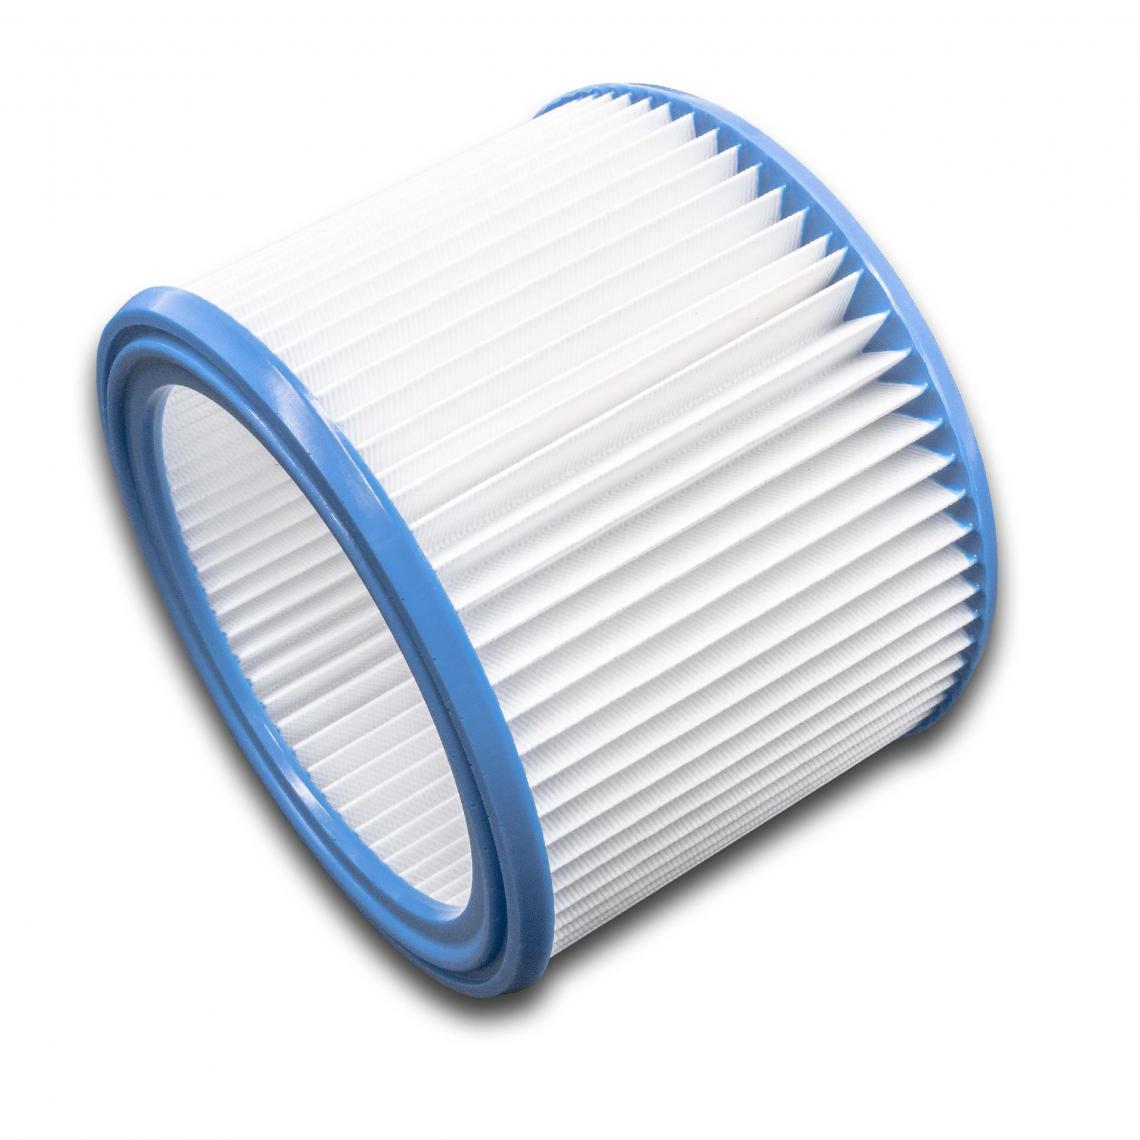 Vhbw - vhbw Set de filtres 10x Filtre plissé compatible avec Nilfisk Aero 21 / 21 INOX, 26, 31 INOX aspirateur à sec ou humide - Filtre à cartouche - Accessoire entretien des sols